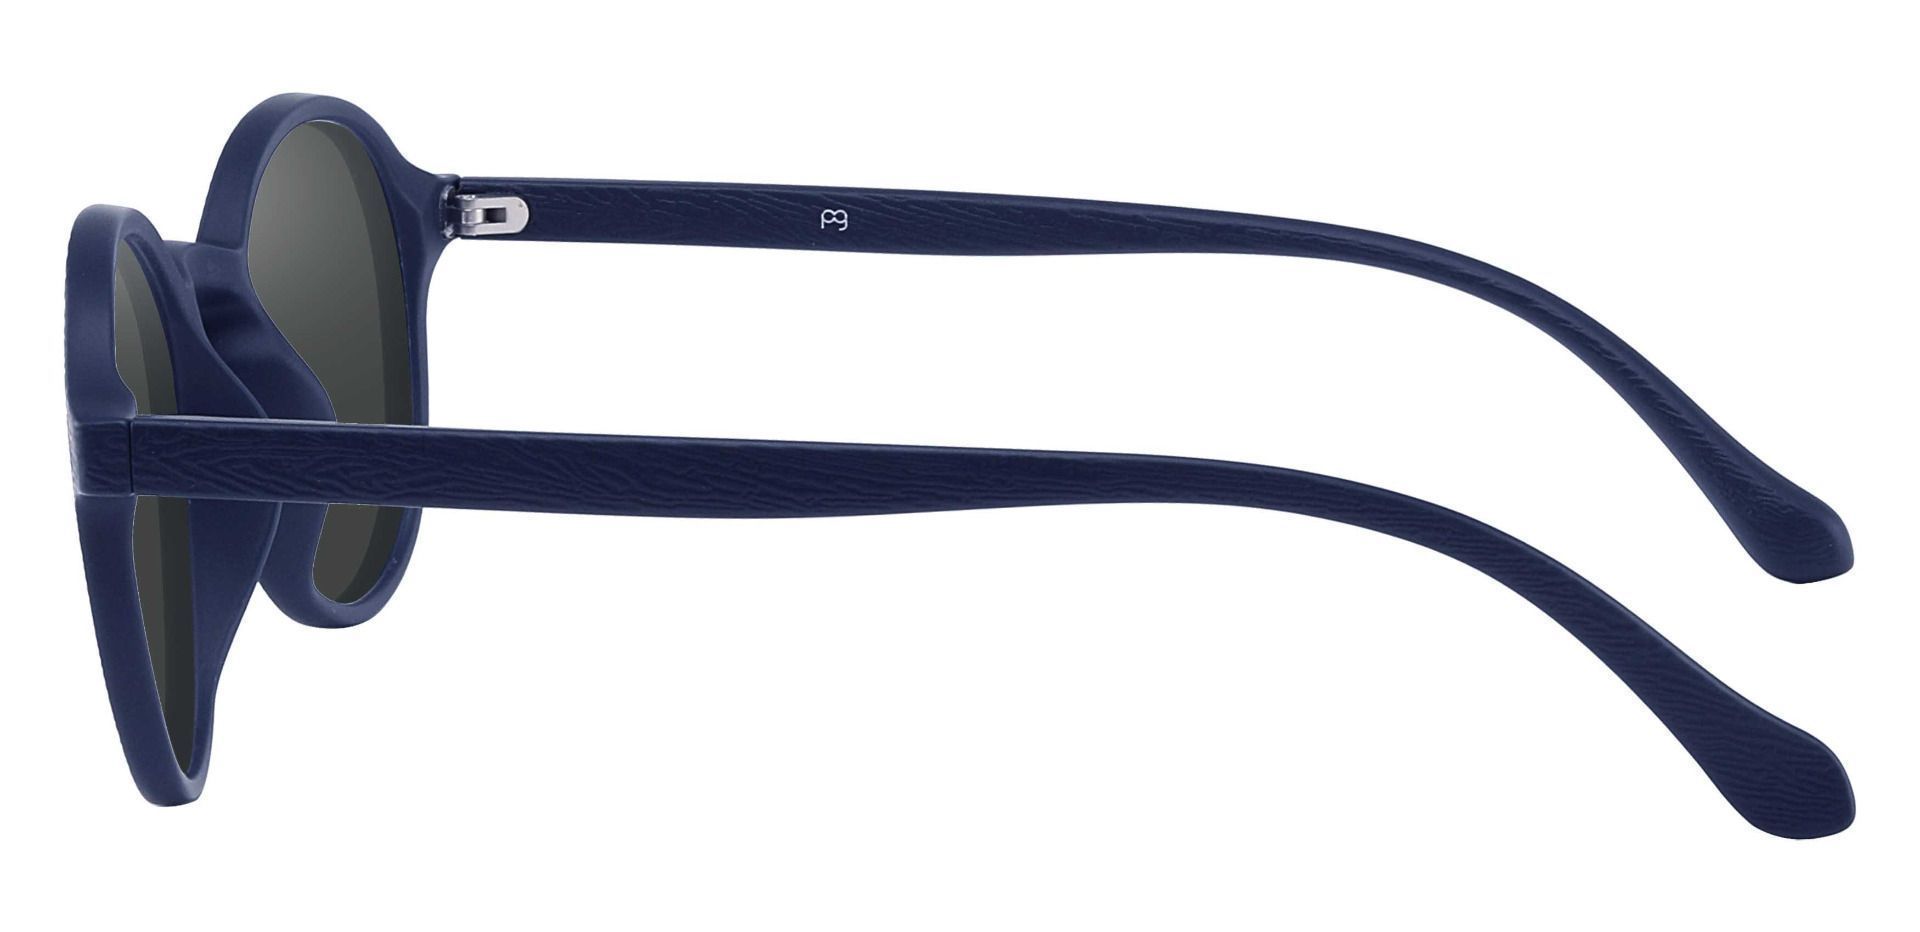 Whitney Round Prescription Sunglasses - Blue Frame With Gray Lenses